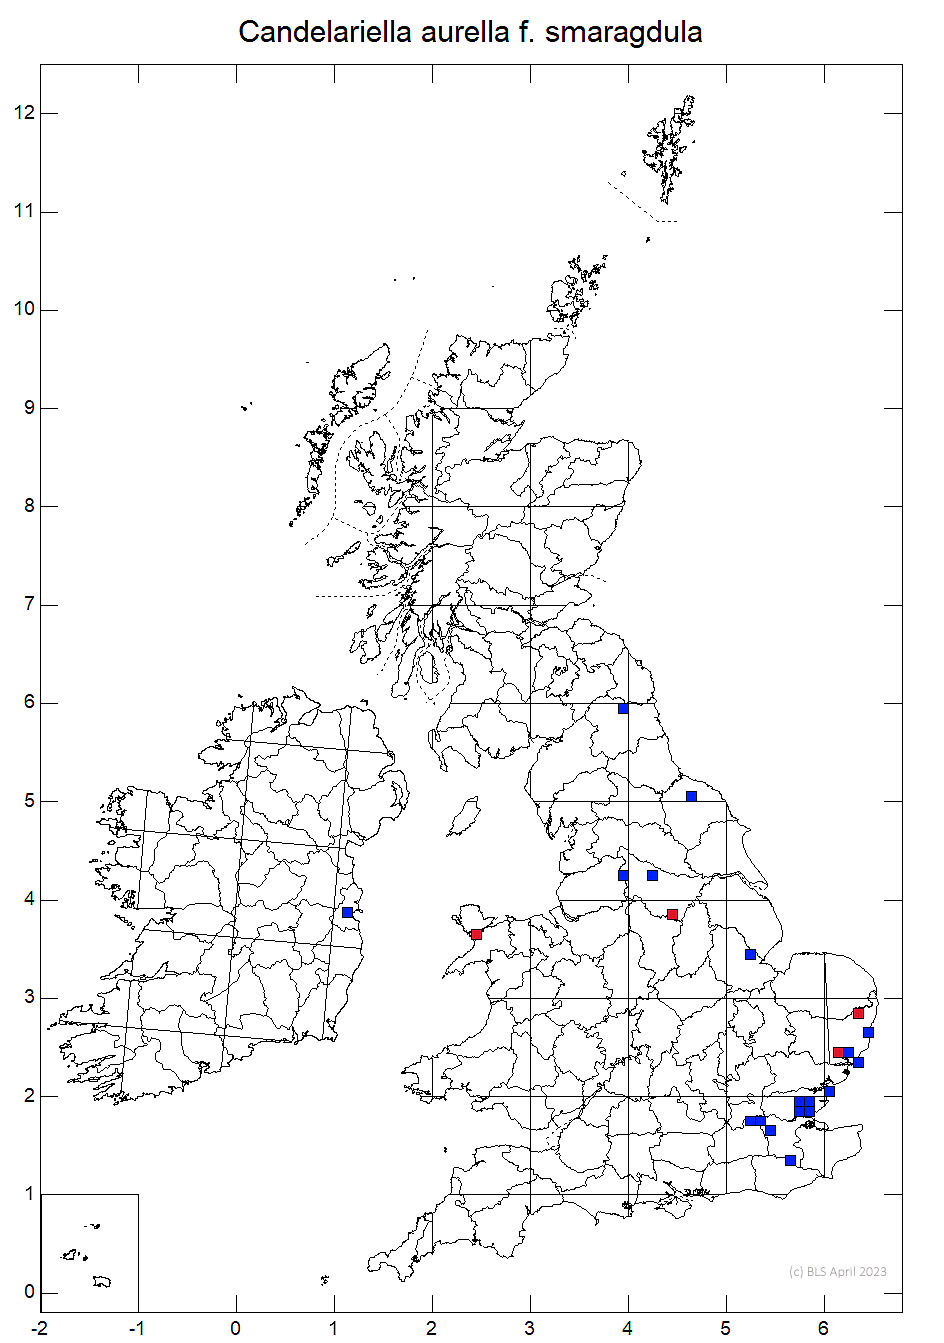 Candelariella aurella f. smaragdula 10km sq distribution map